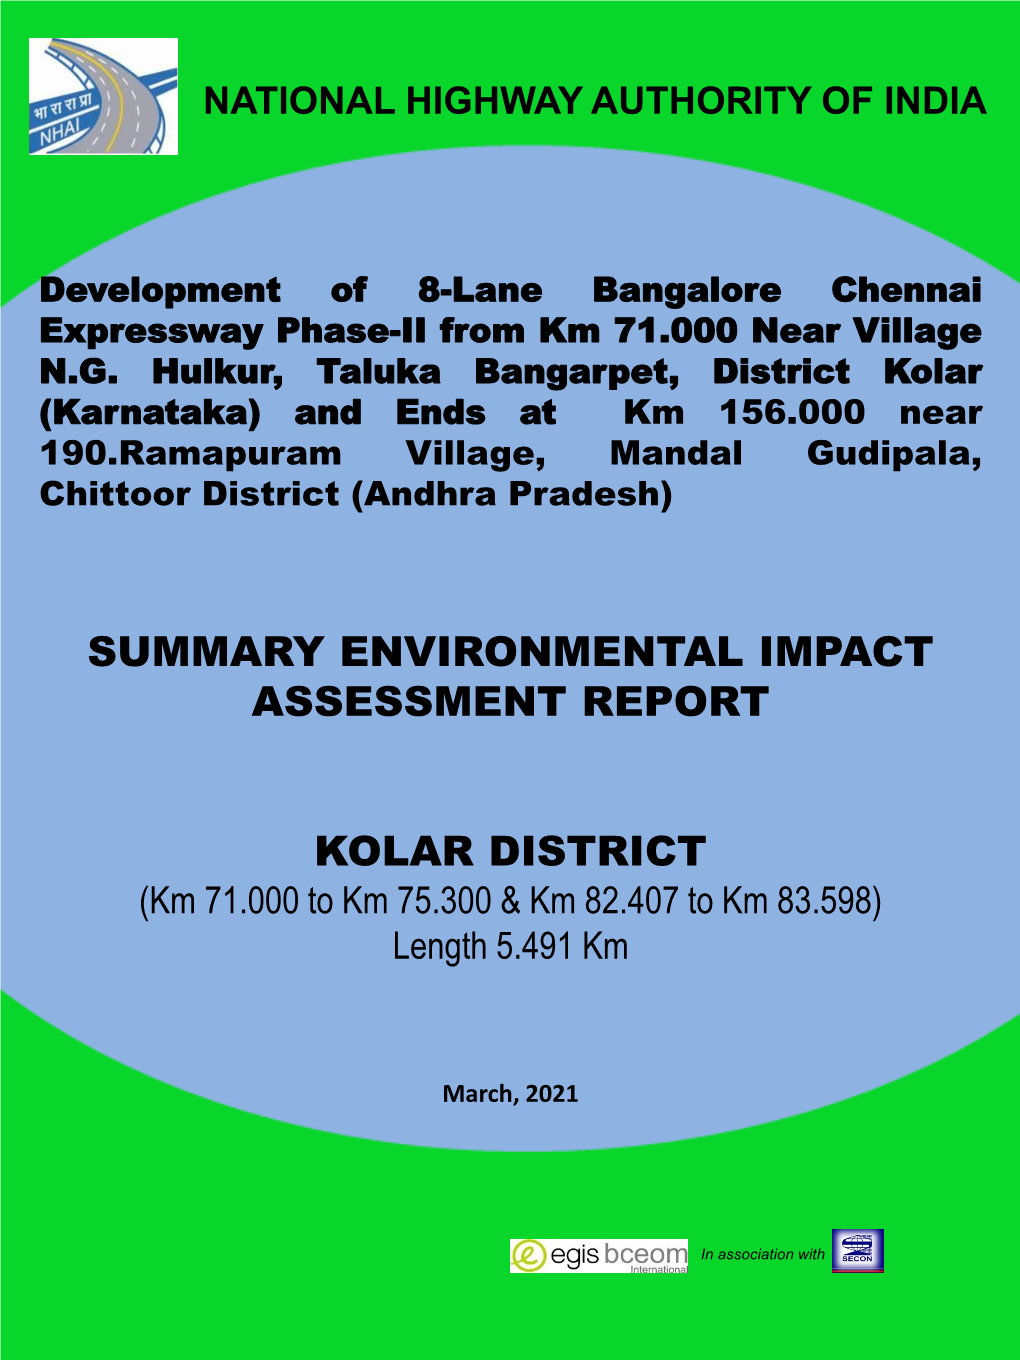 Summary Environmental Impact Assessment Report